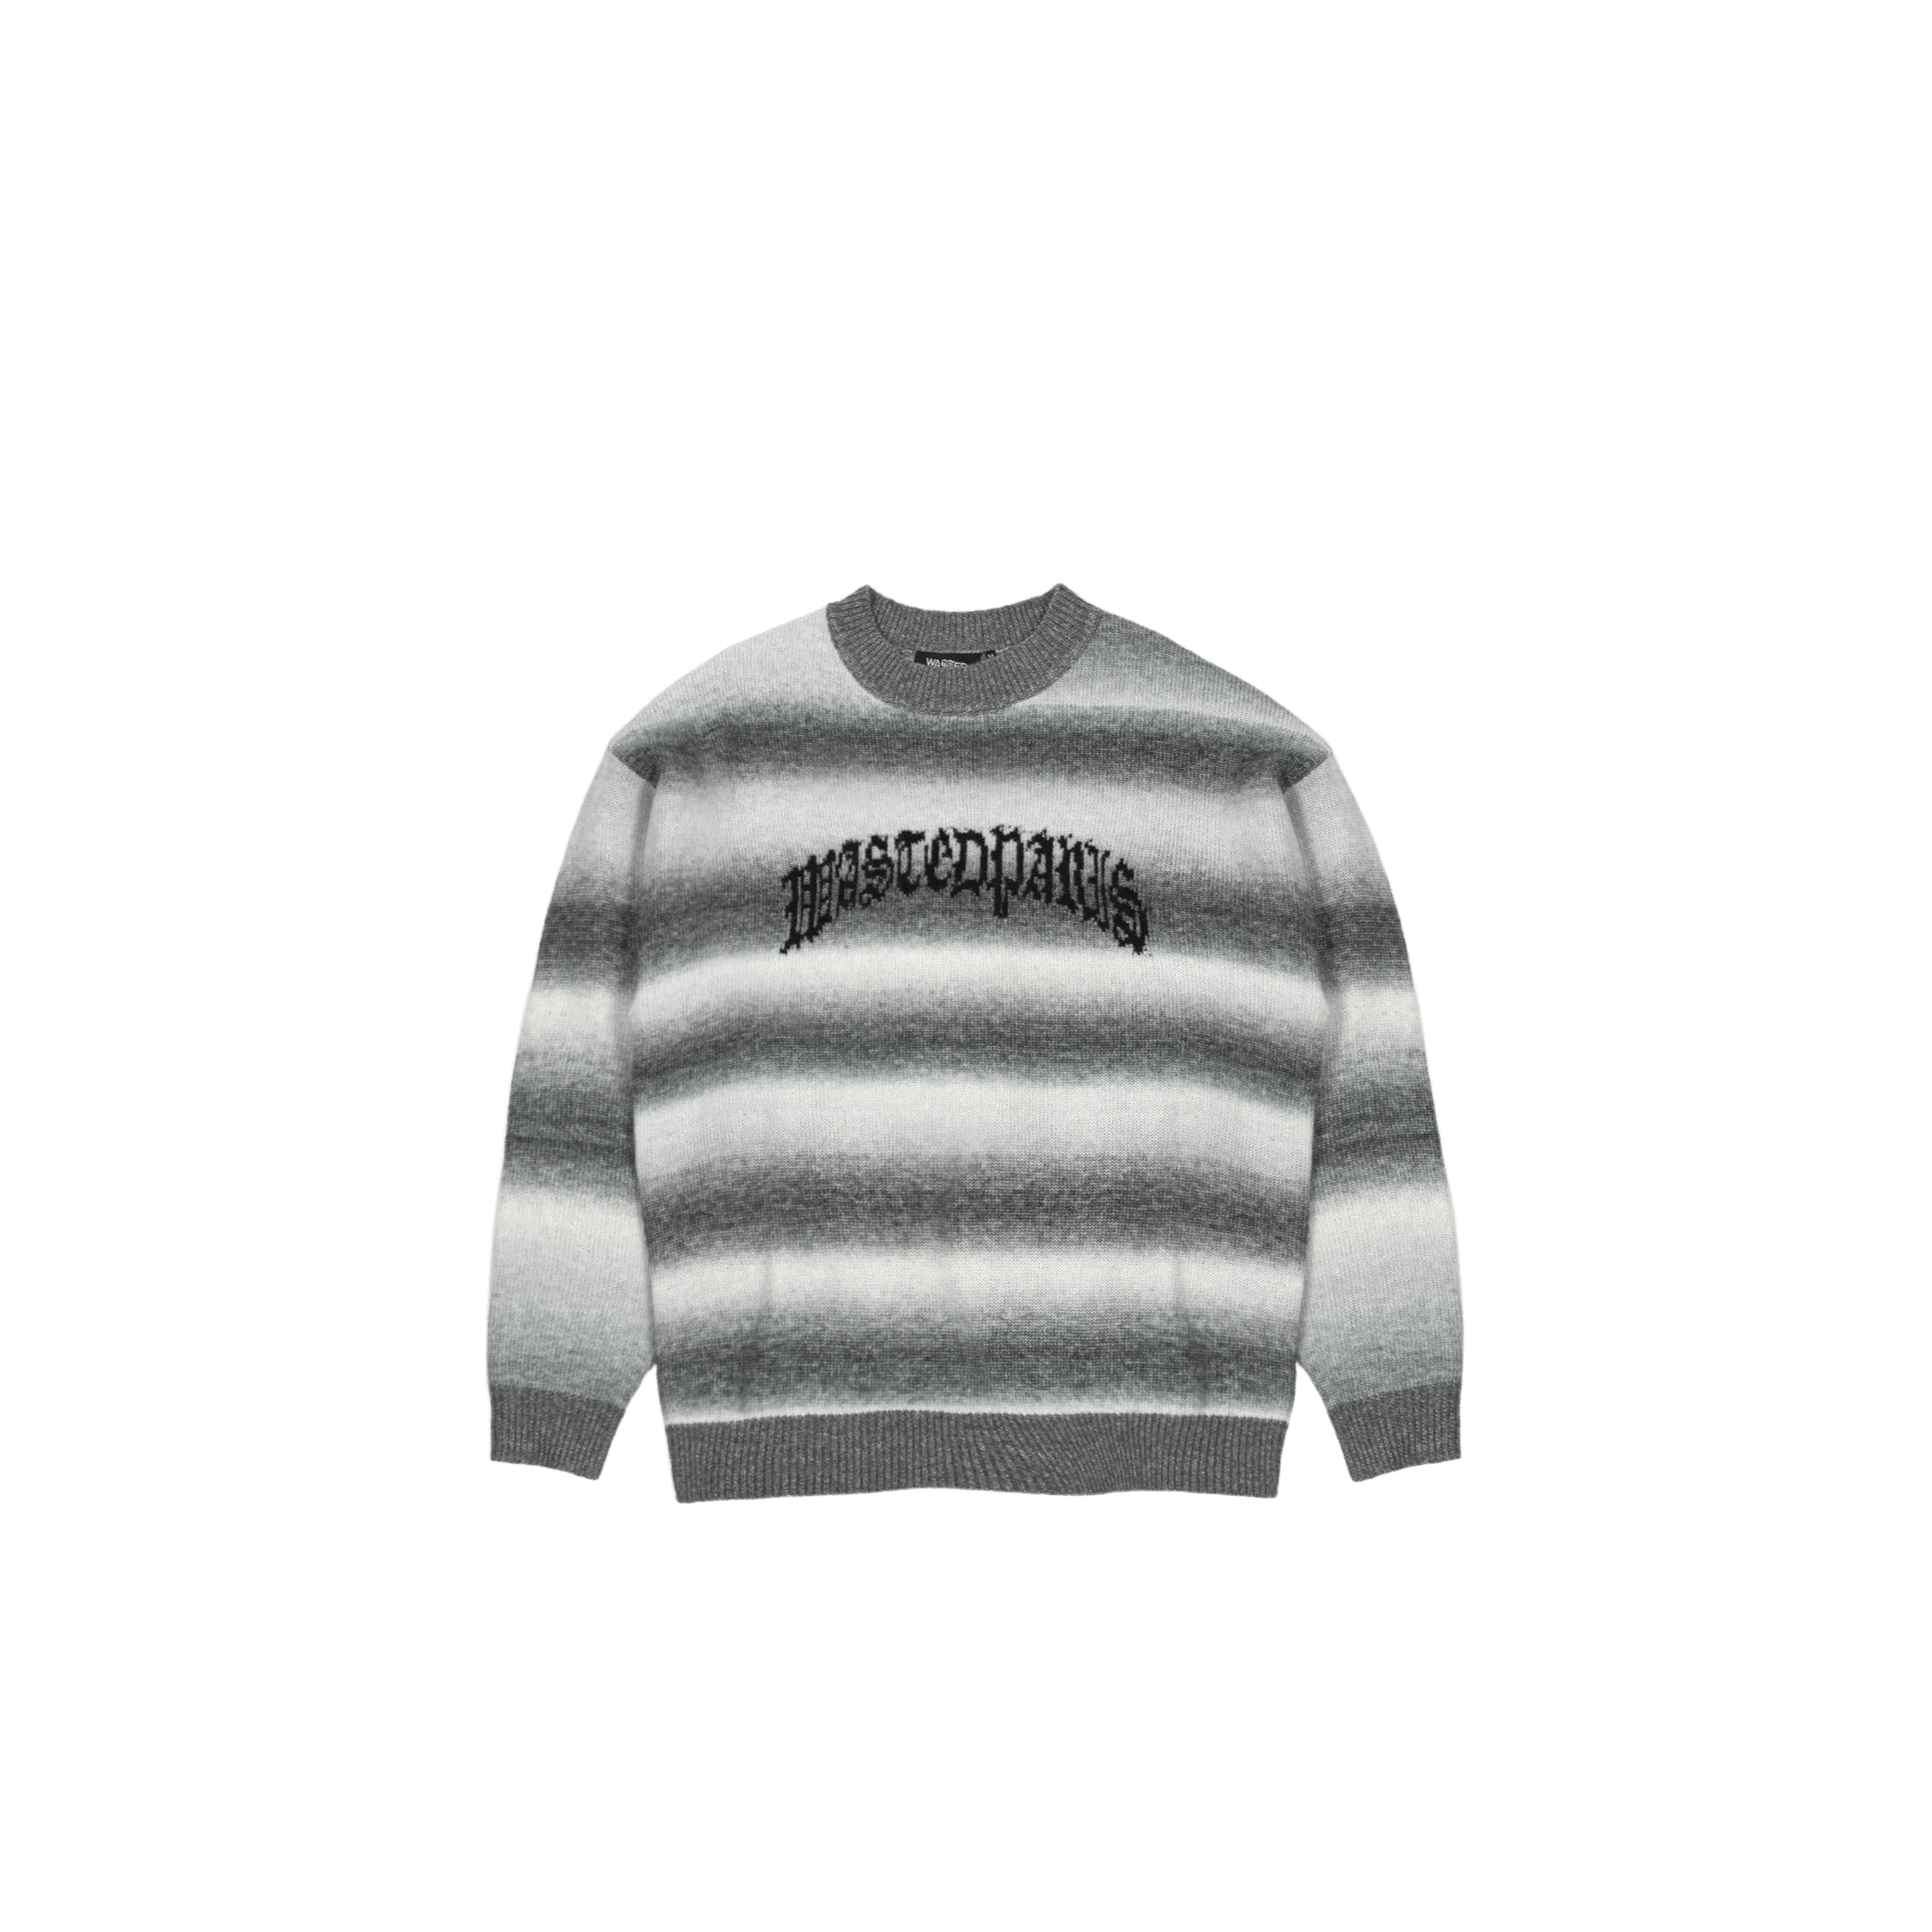 Sweater Blur Kingdom - Gradient Black & White